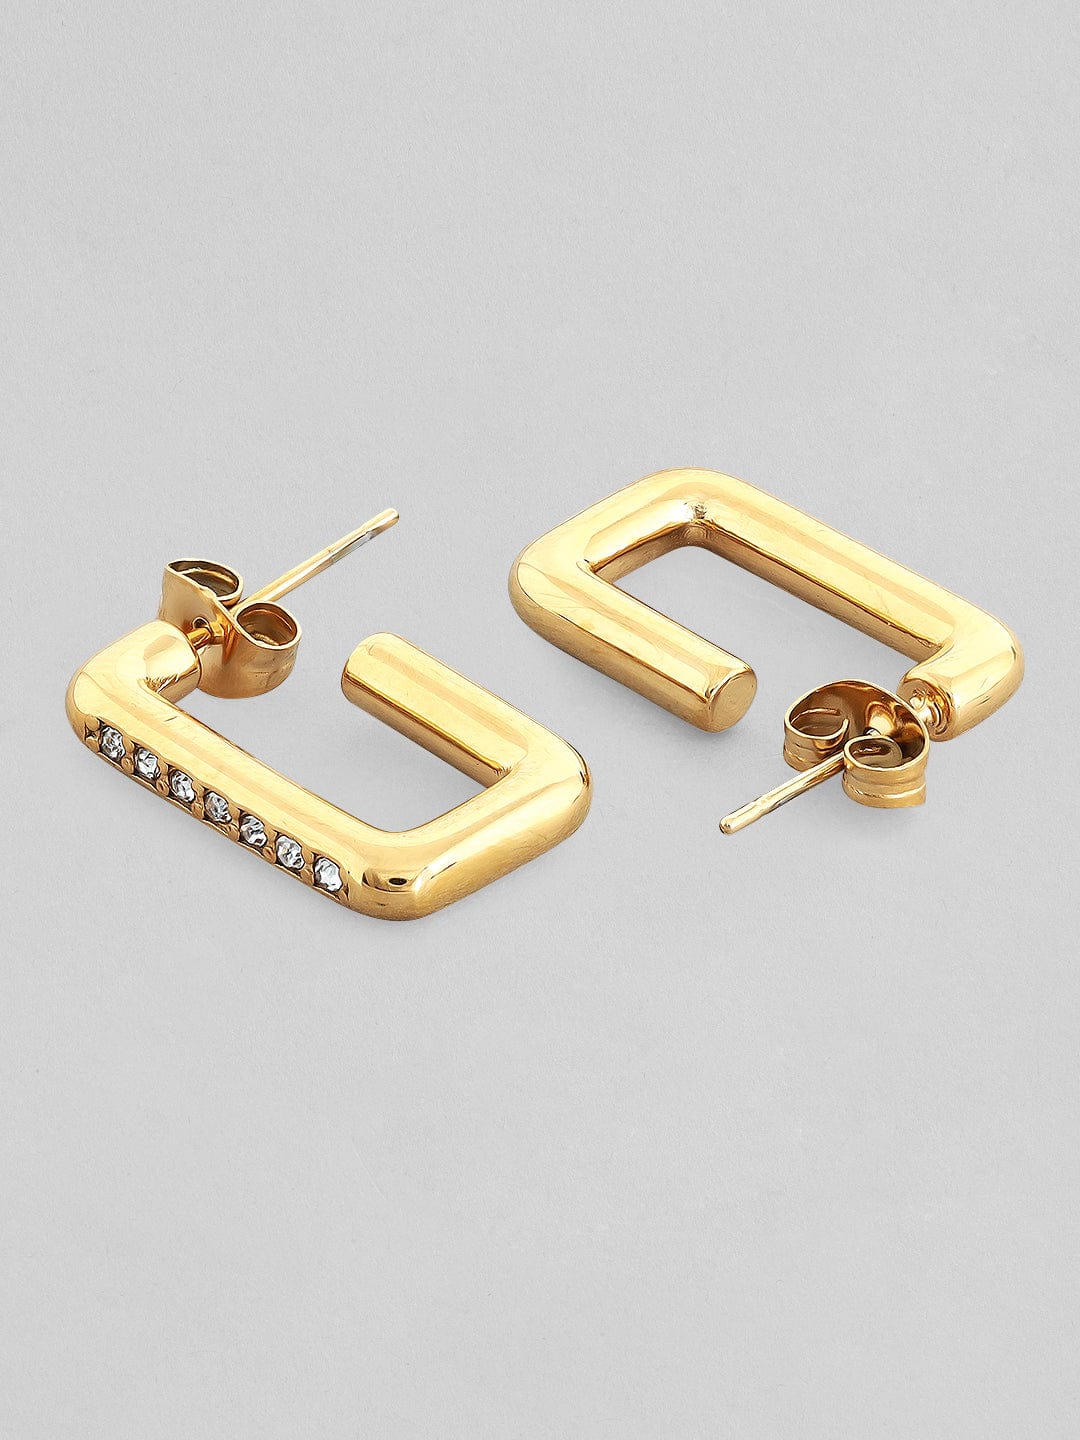 Rubans Voguish 18K Gold Plated Stainless Steel Waterproof Rectangular Hoop Errings With Zircons Studded. Earrings